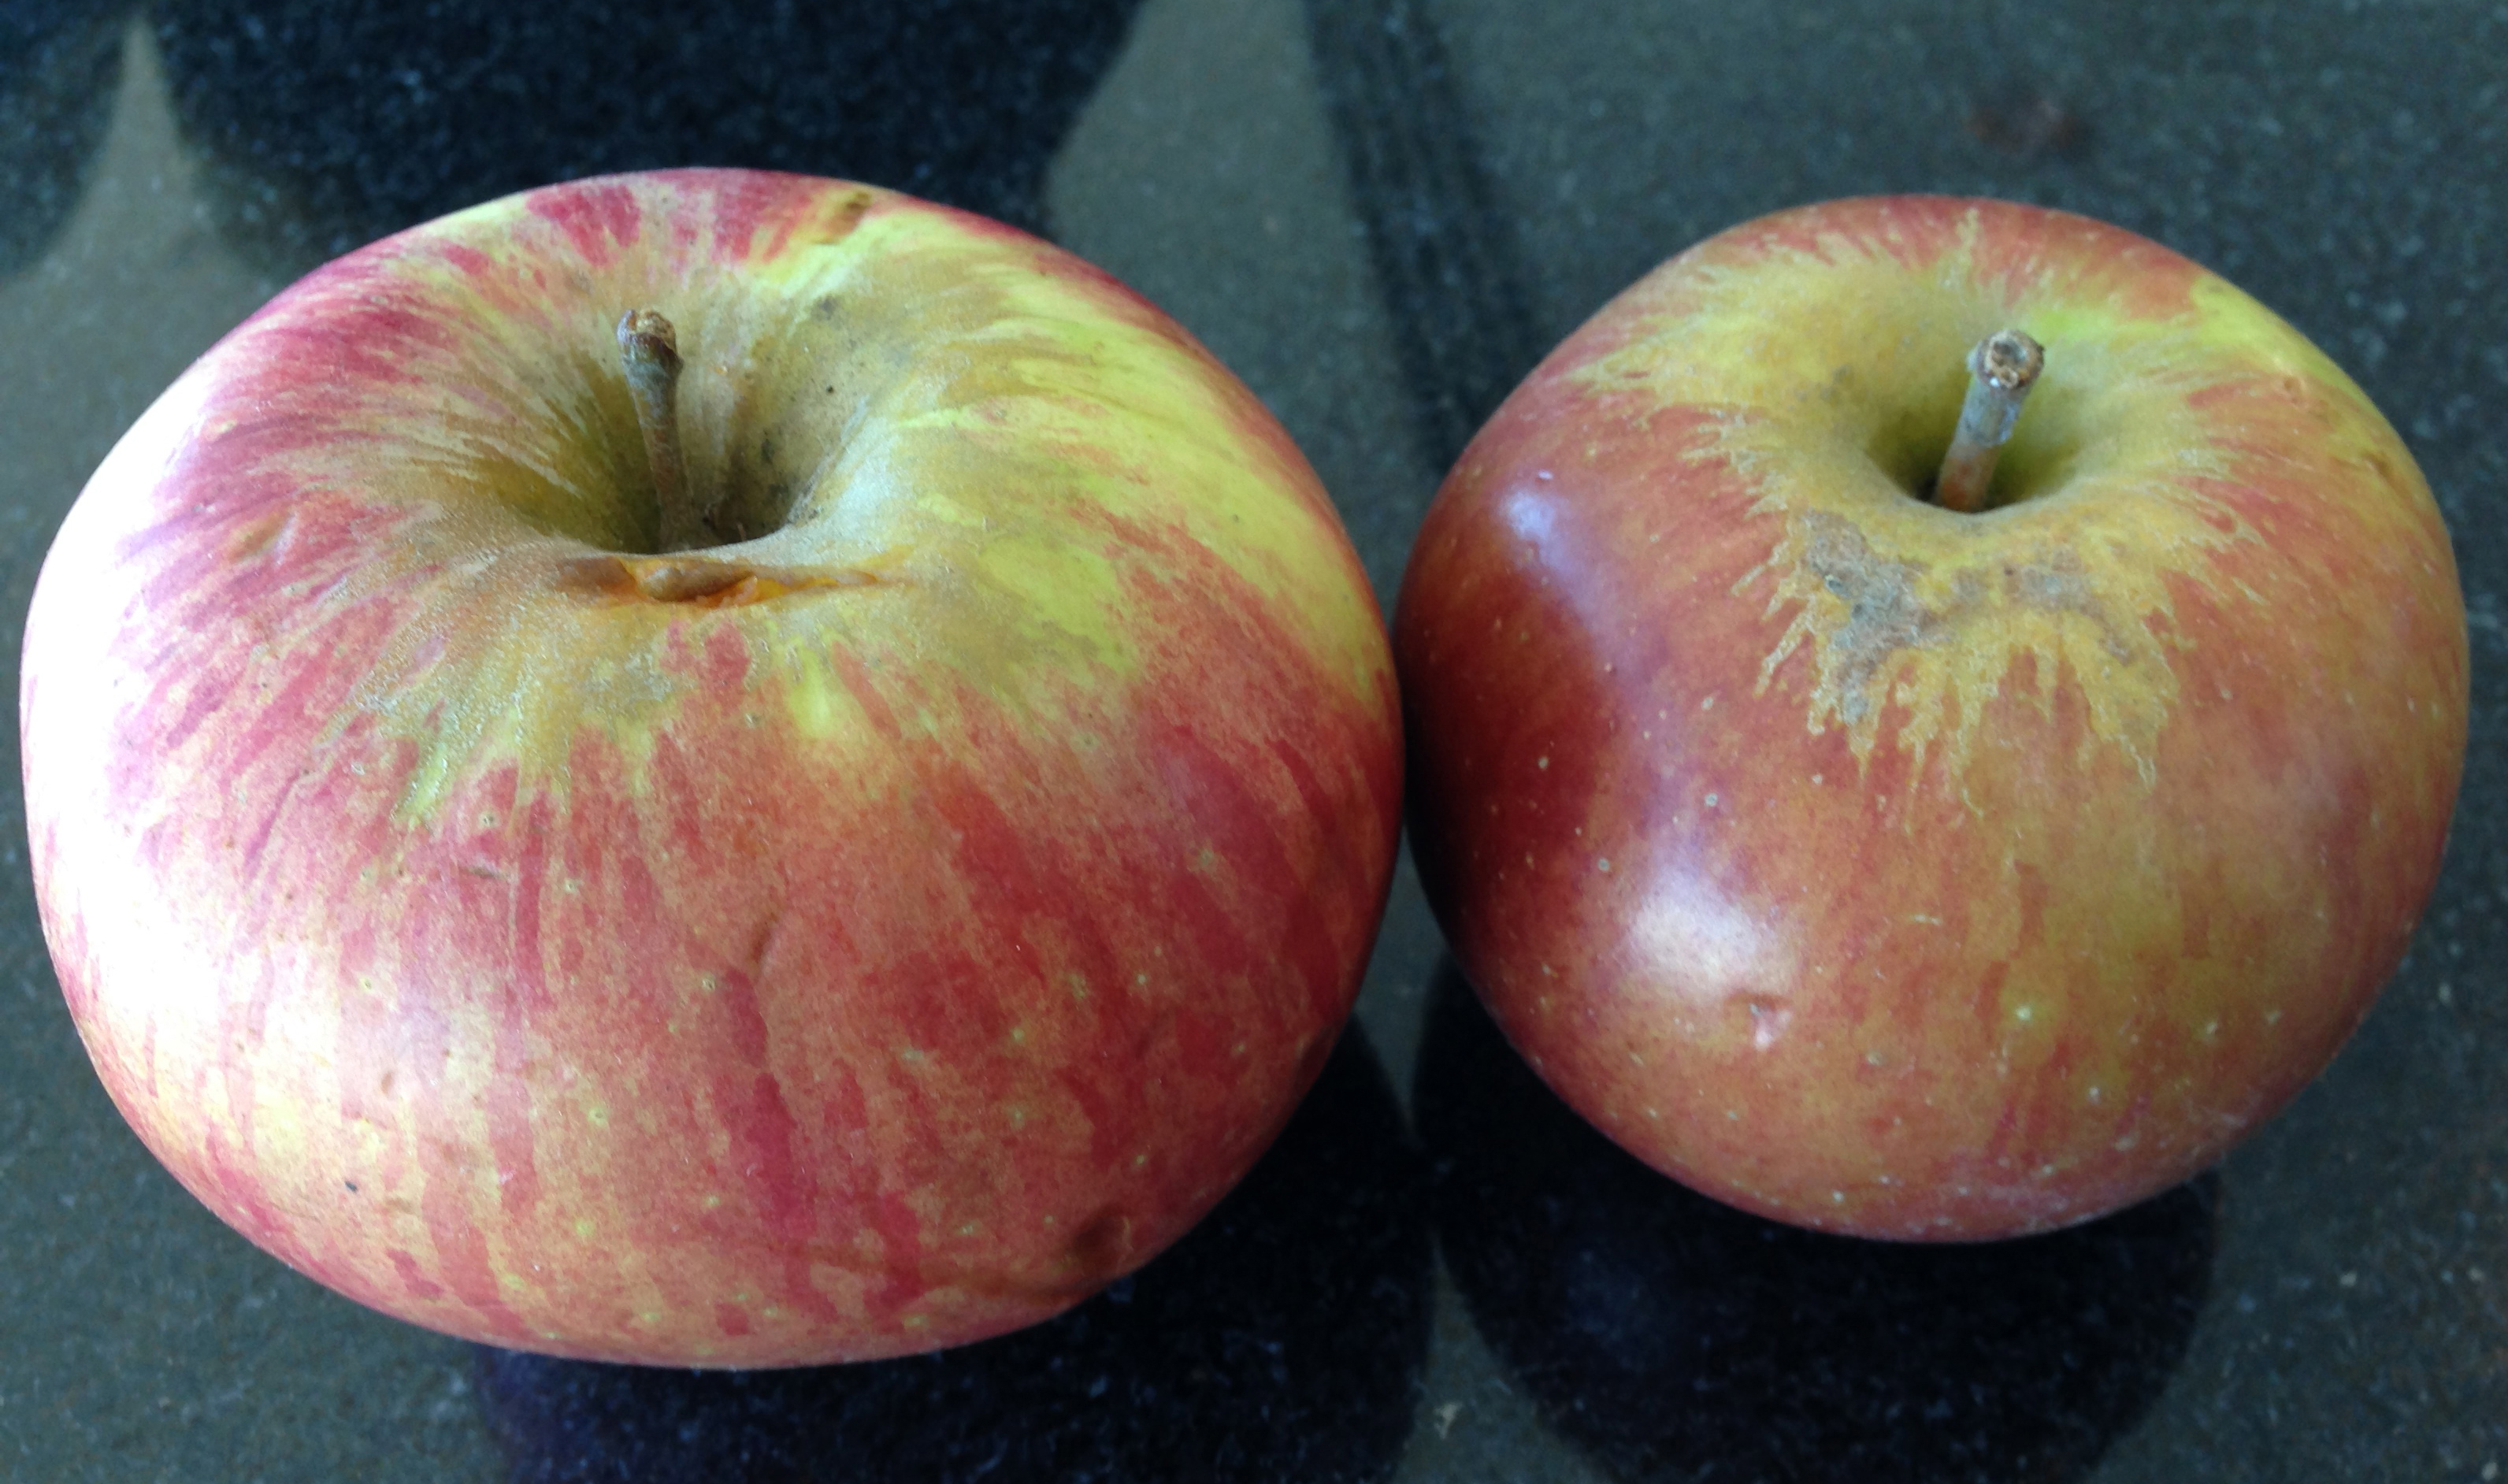 apples to apple VII: northern spy, mystery apple